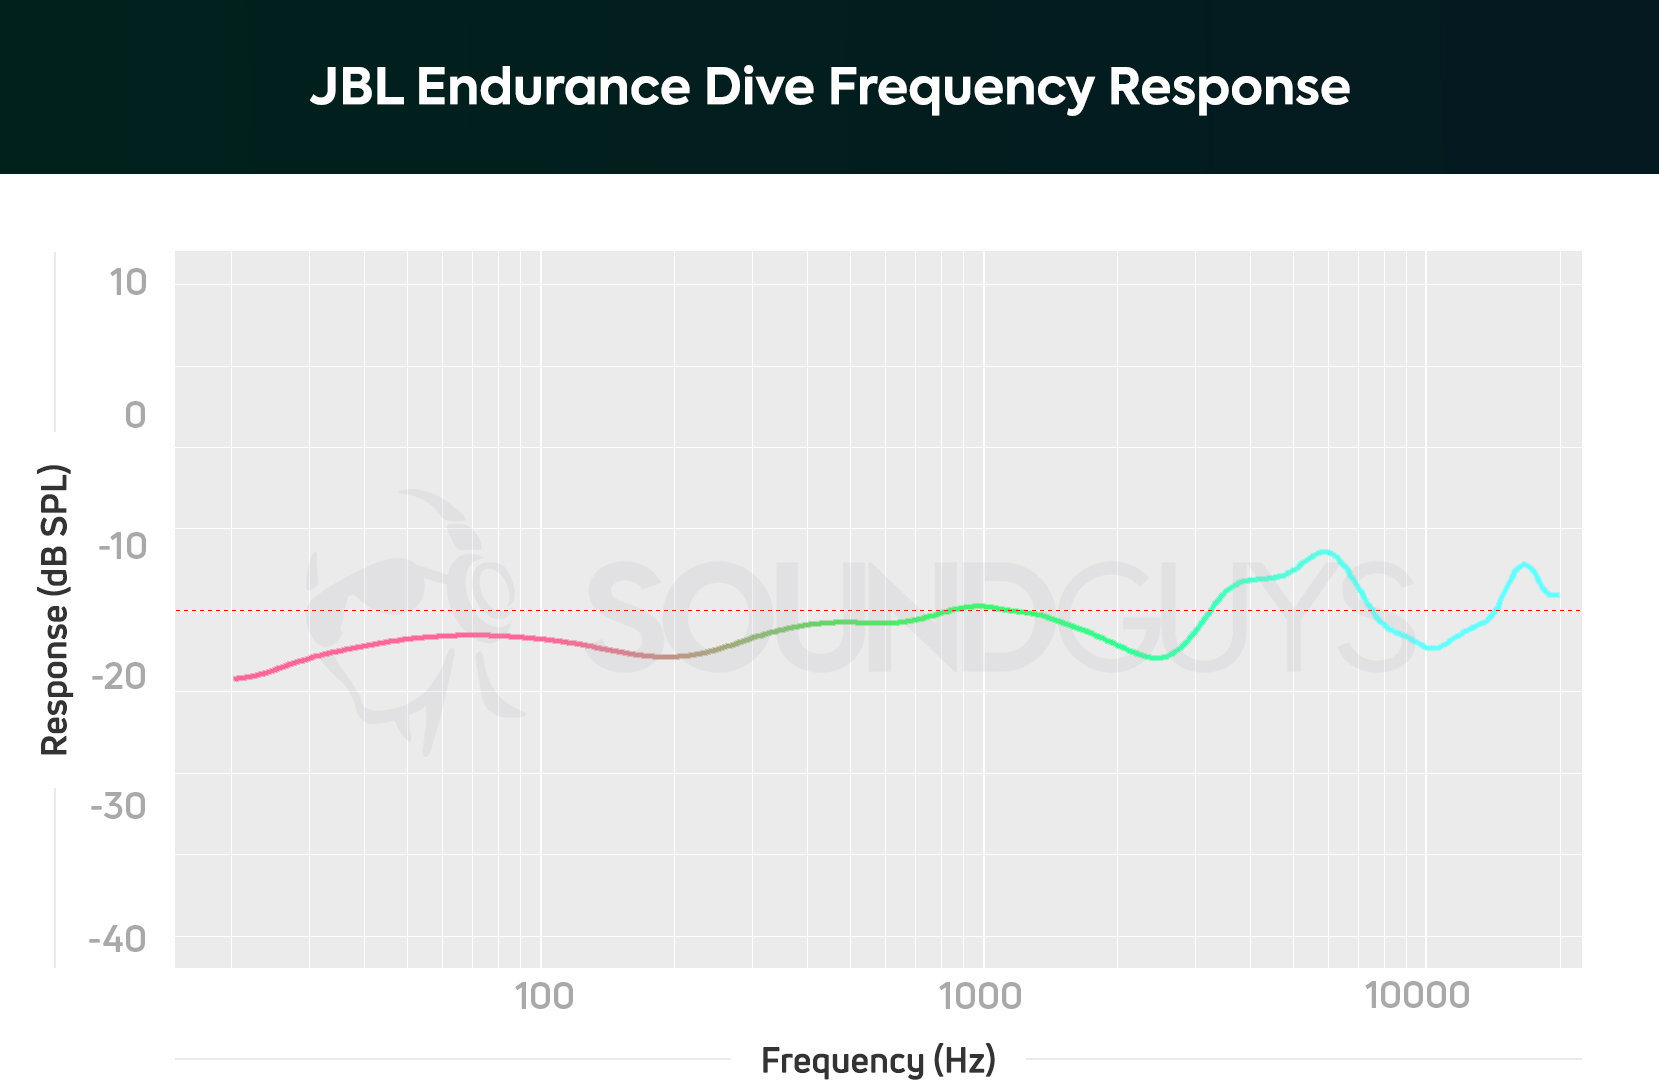 JBL Endurance Dive frequency response chart.